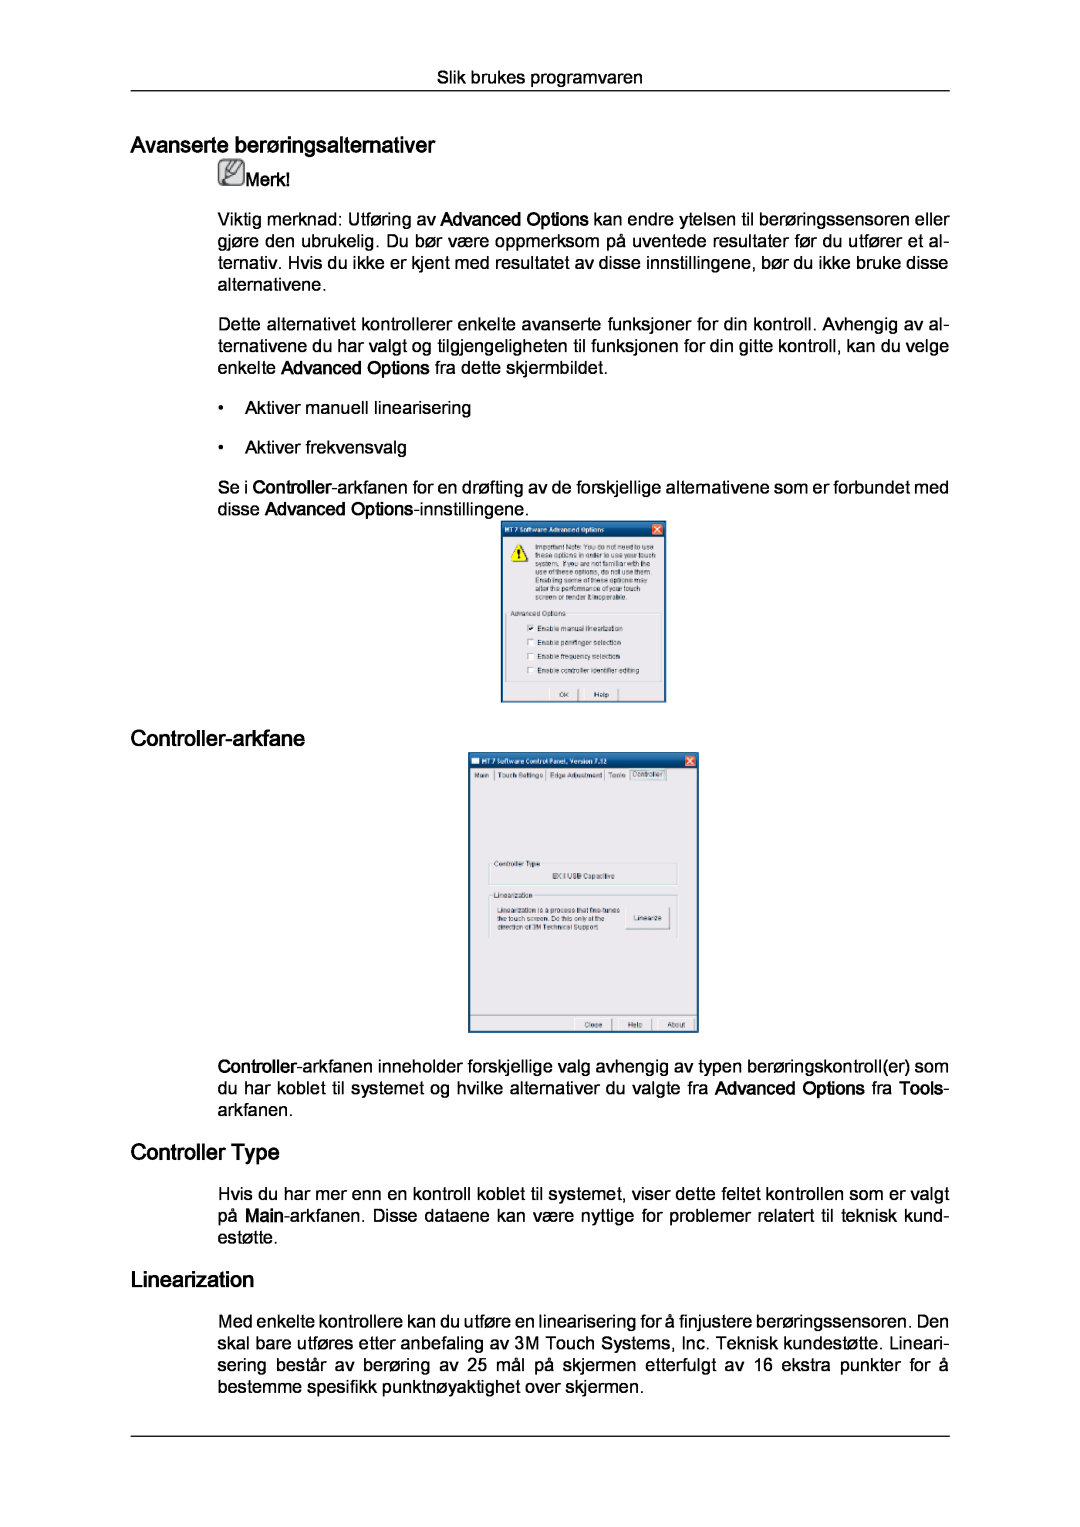 Samsung LH23PTTMBC/EN manual Avanserte berøringsalternativer, Controller-arkfane, Linearization, Controller Type, Merk 